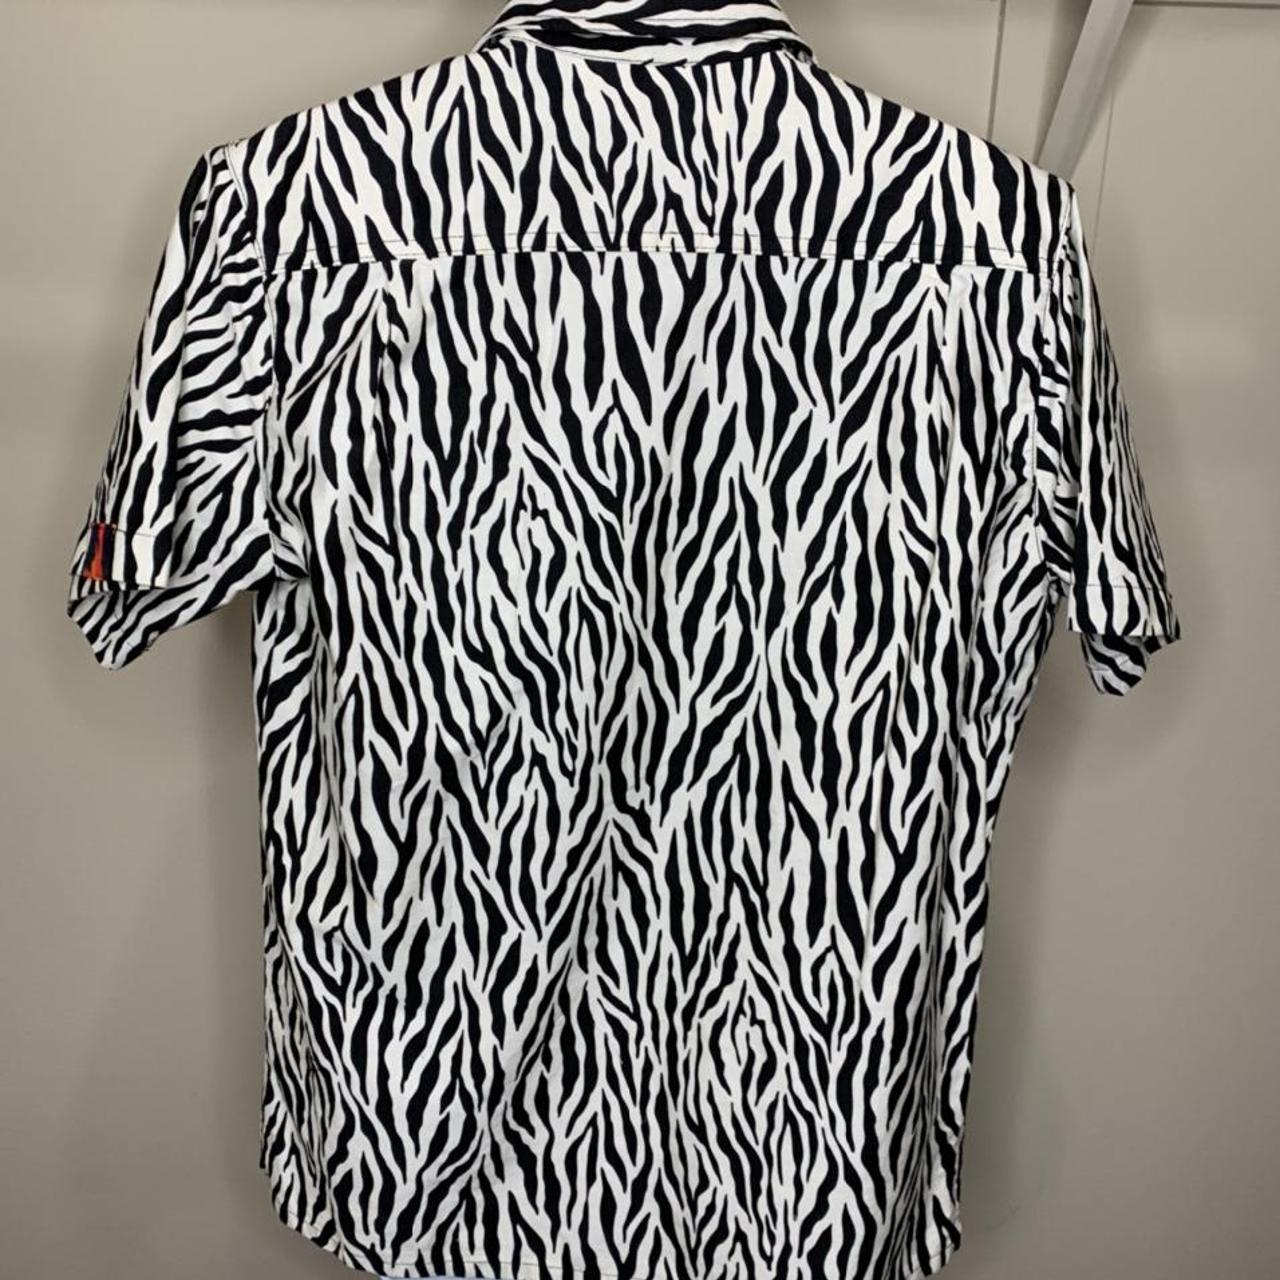 Tony zebra print button down shirt. Bought for $300.... - Depop